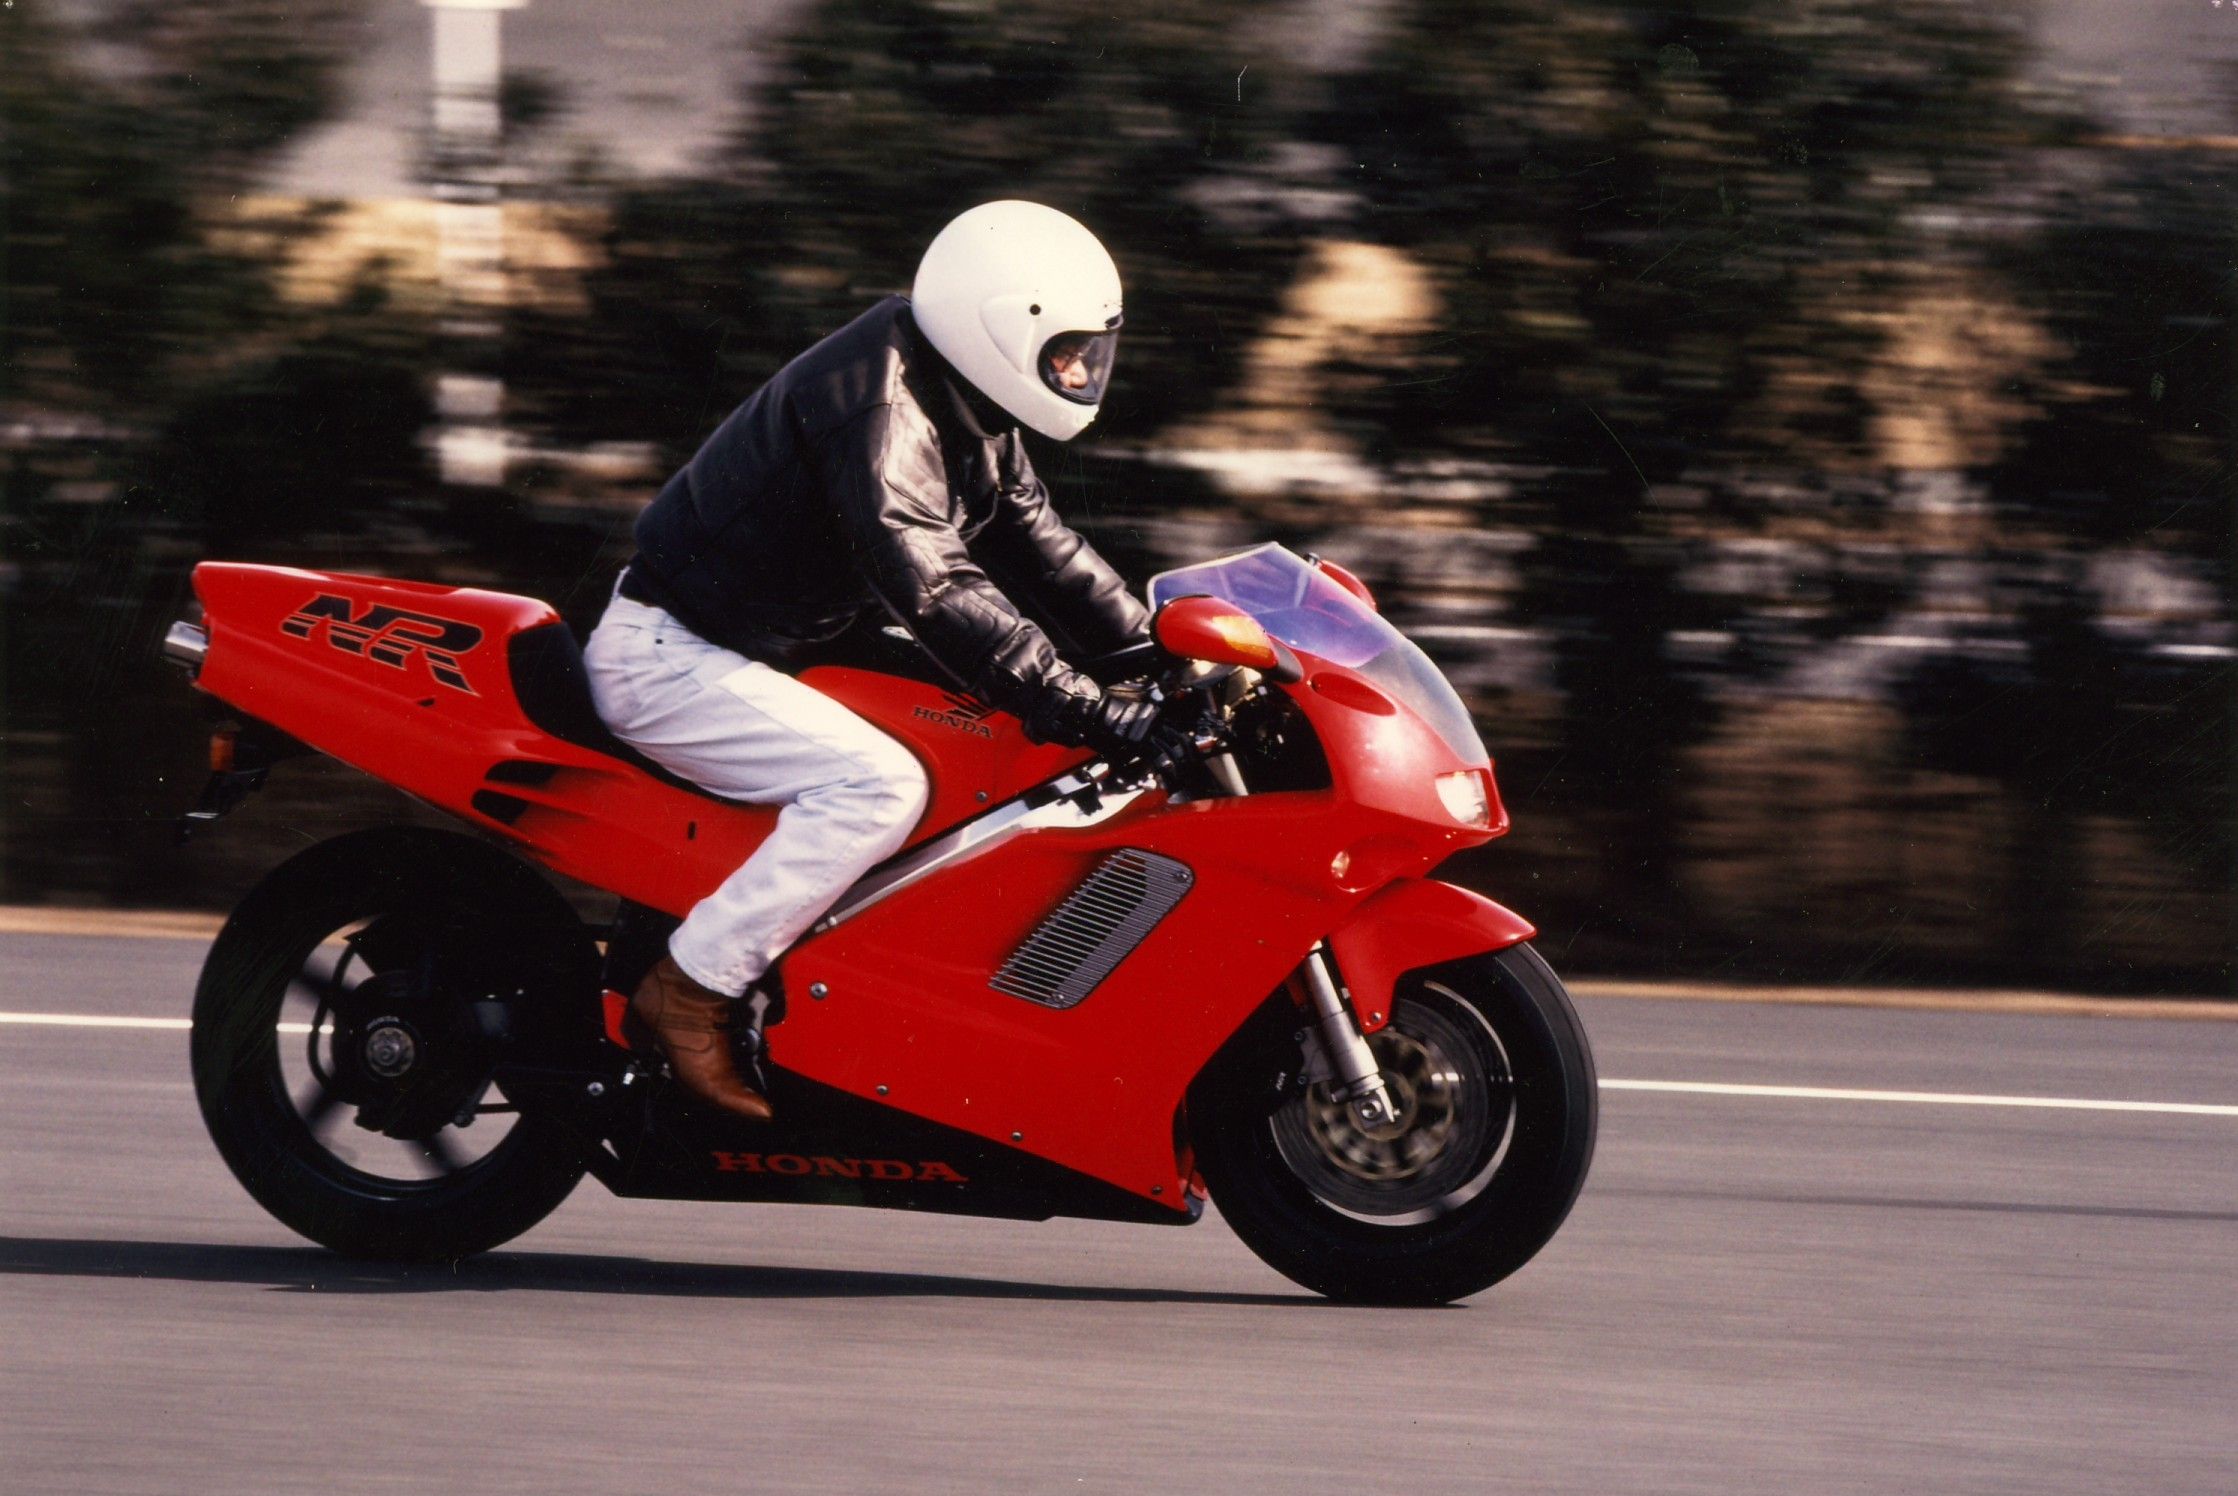 a rider on a Honda NR750 motorcycle